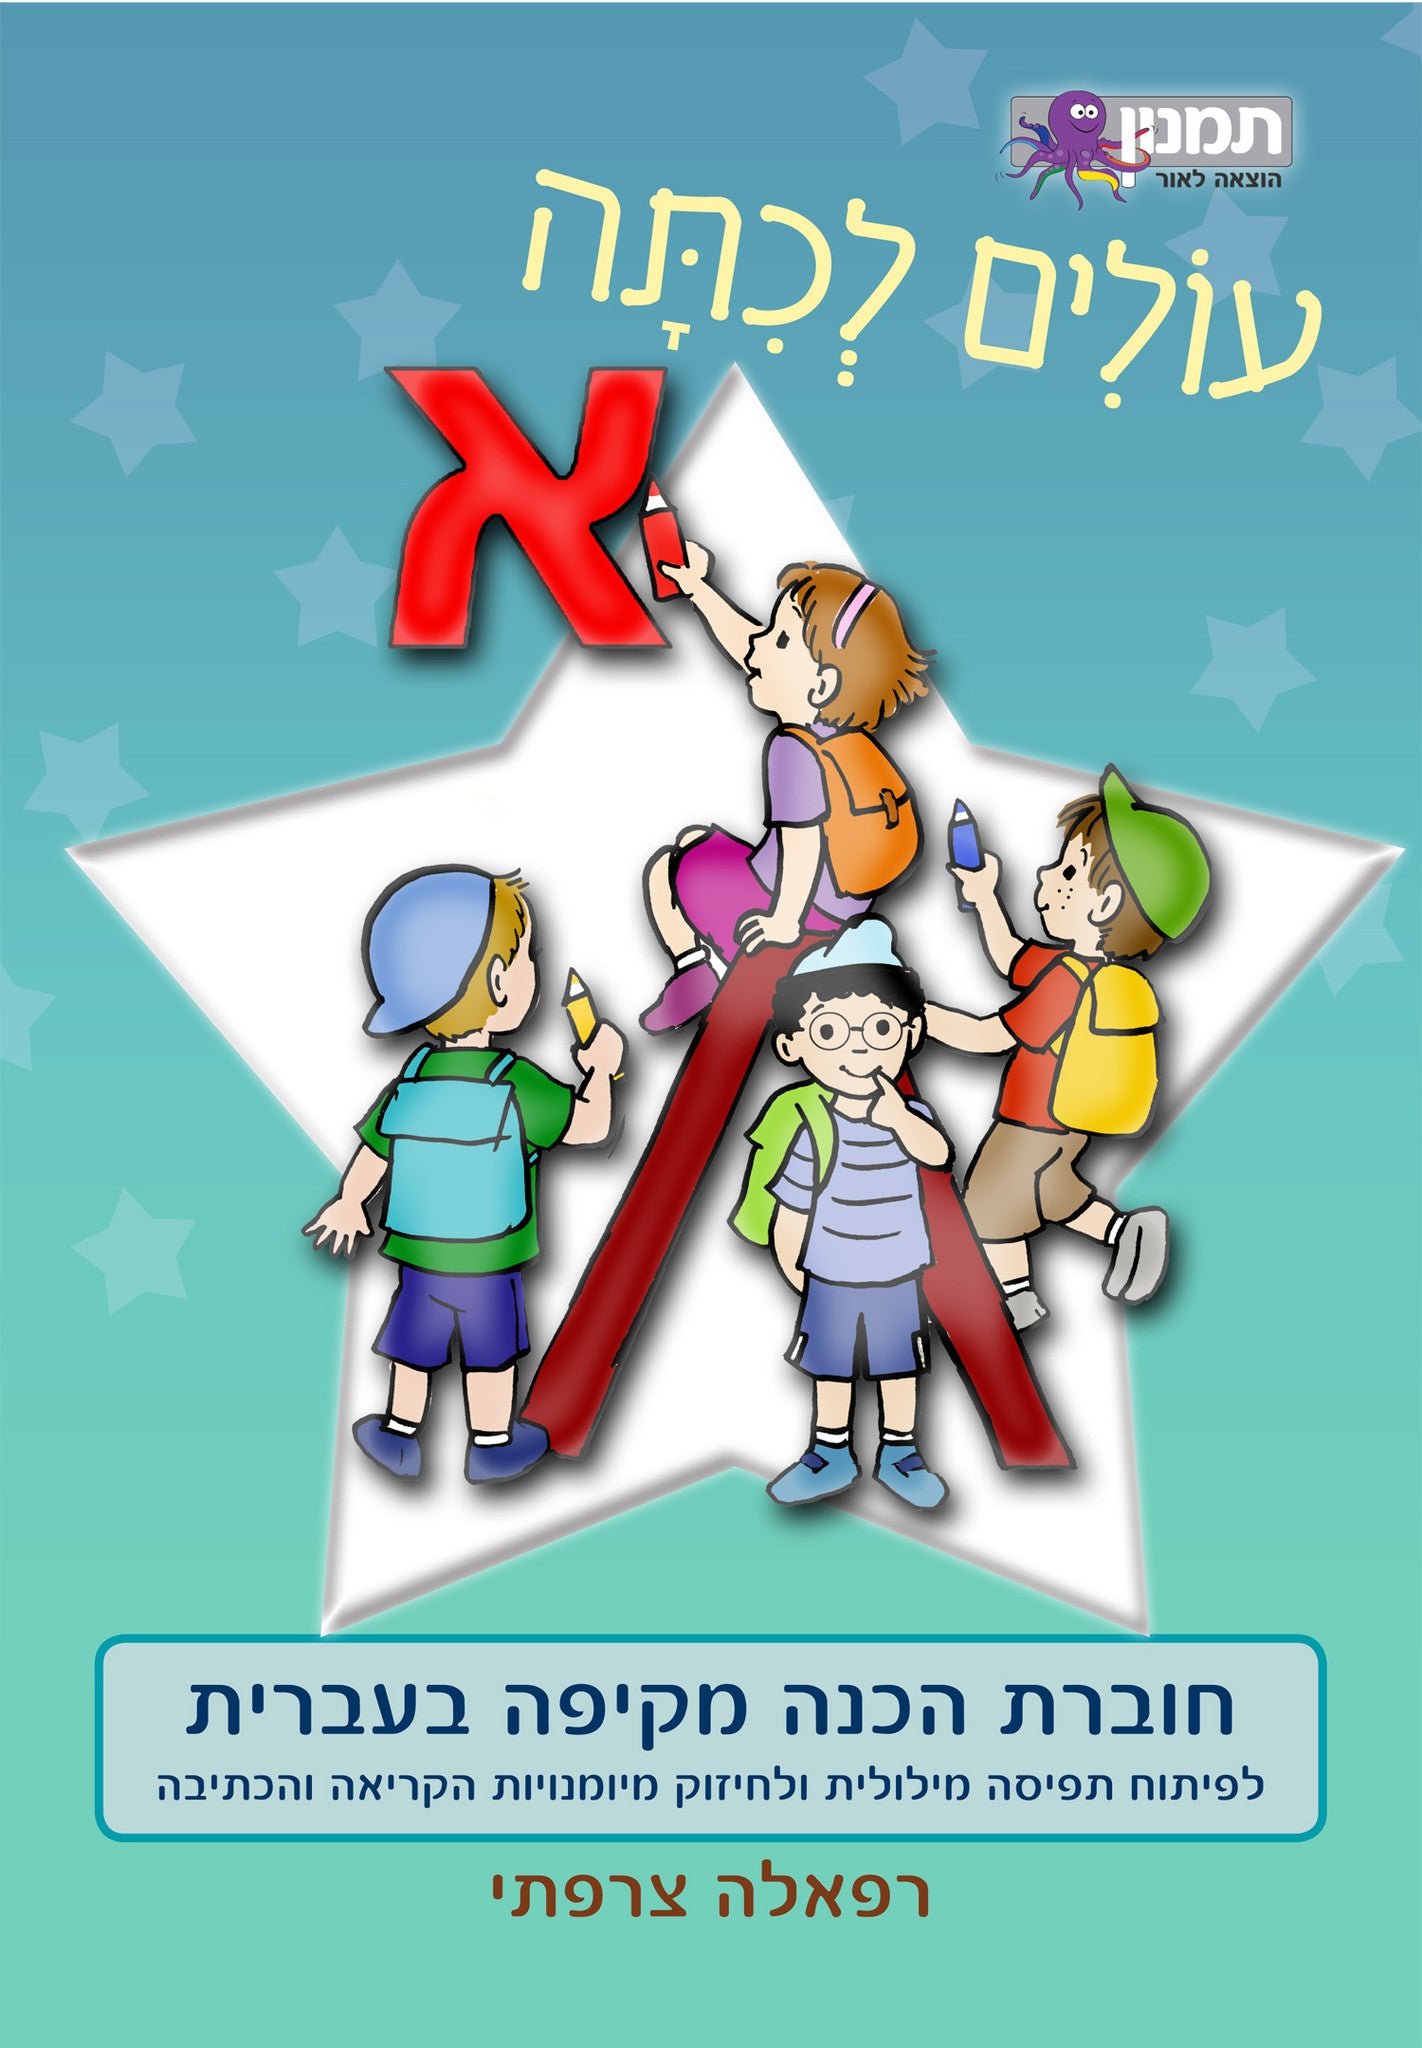 Preparing for first grade - Hebrew